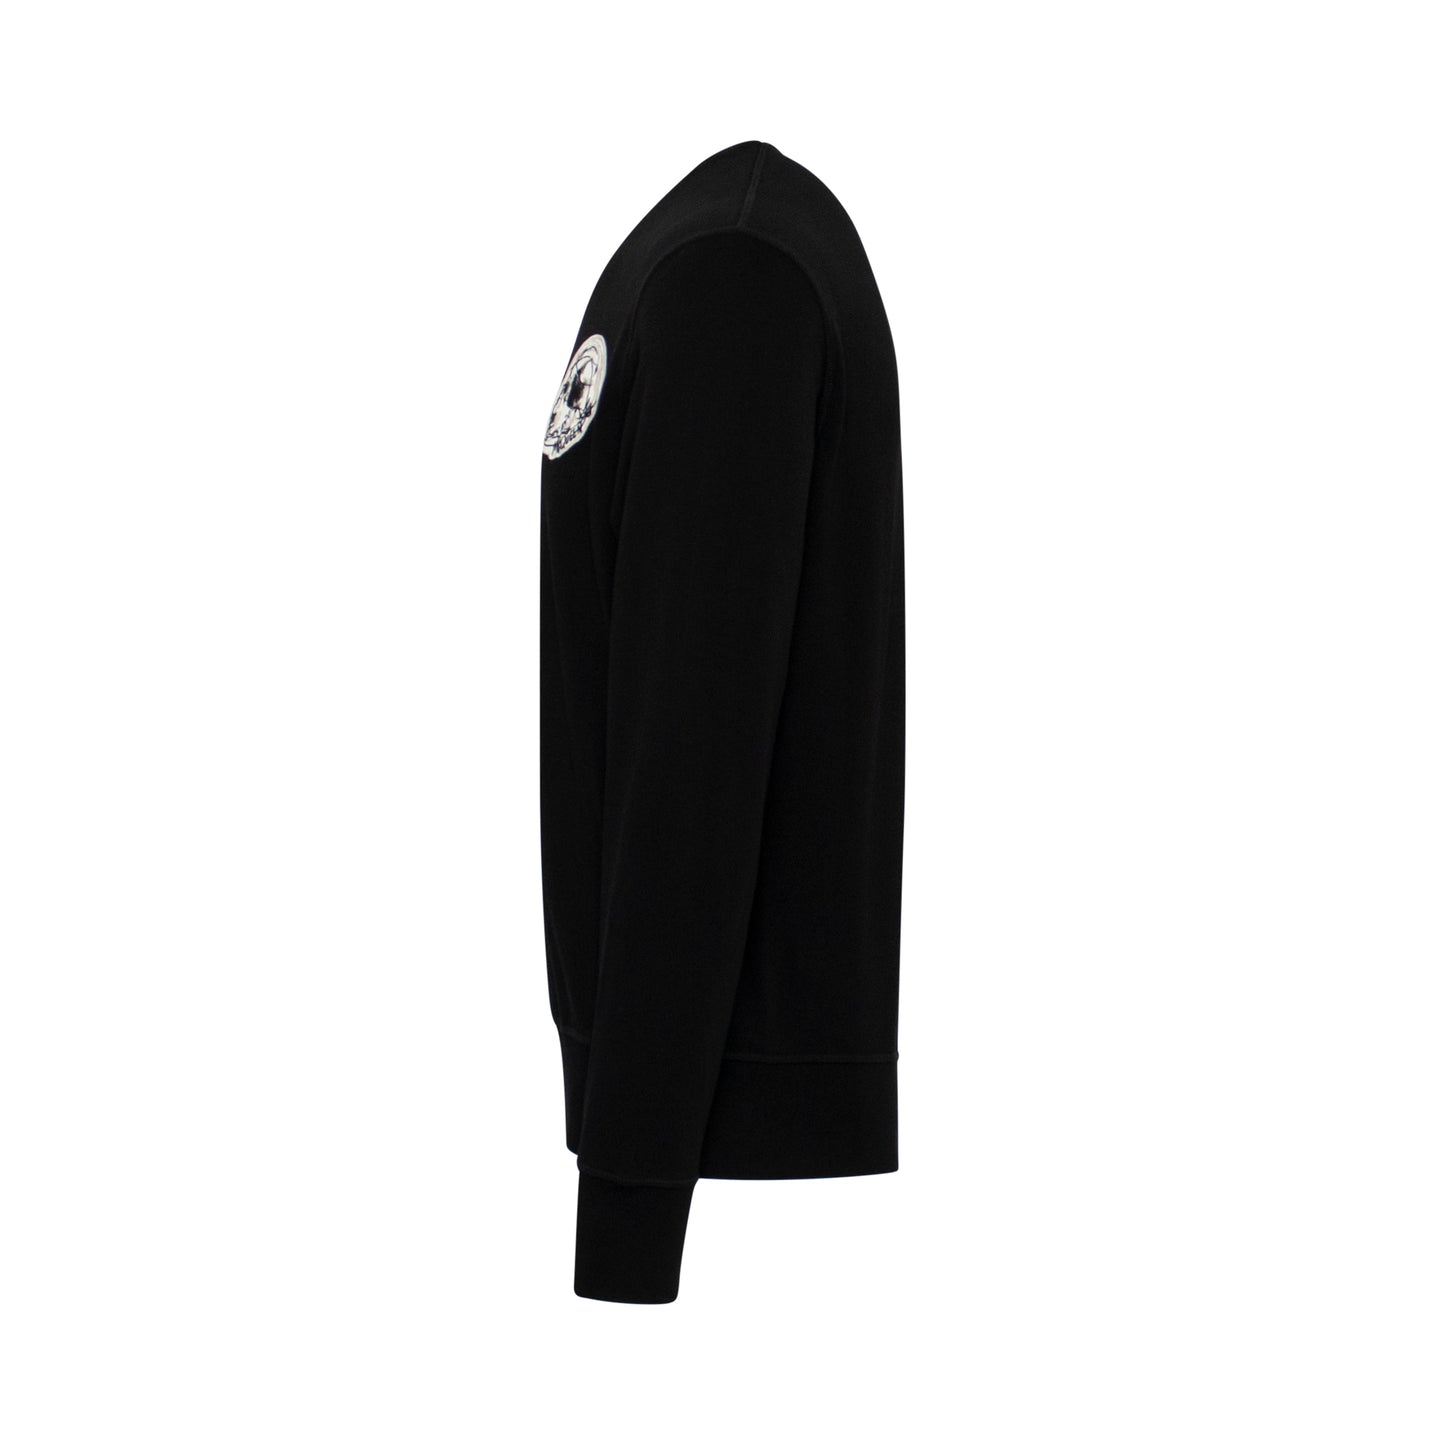 Skull Patch Sweatshirt in Black